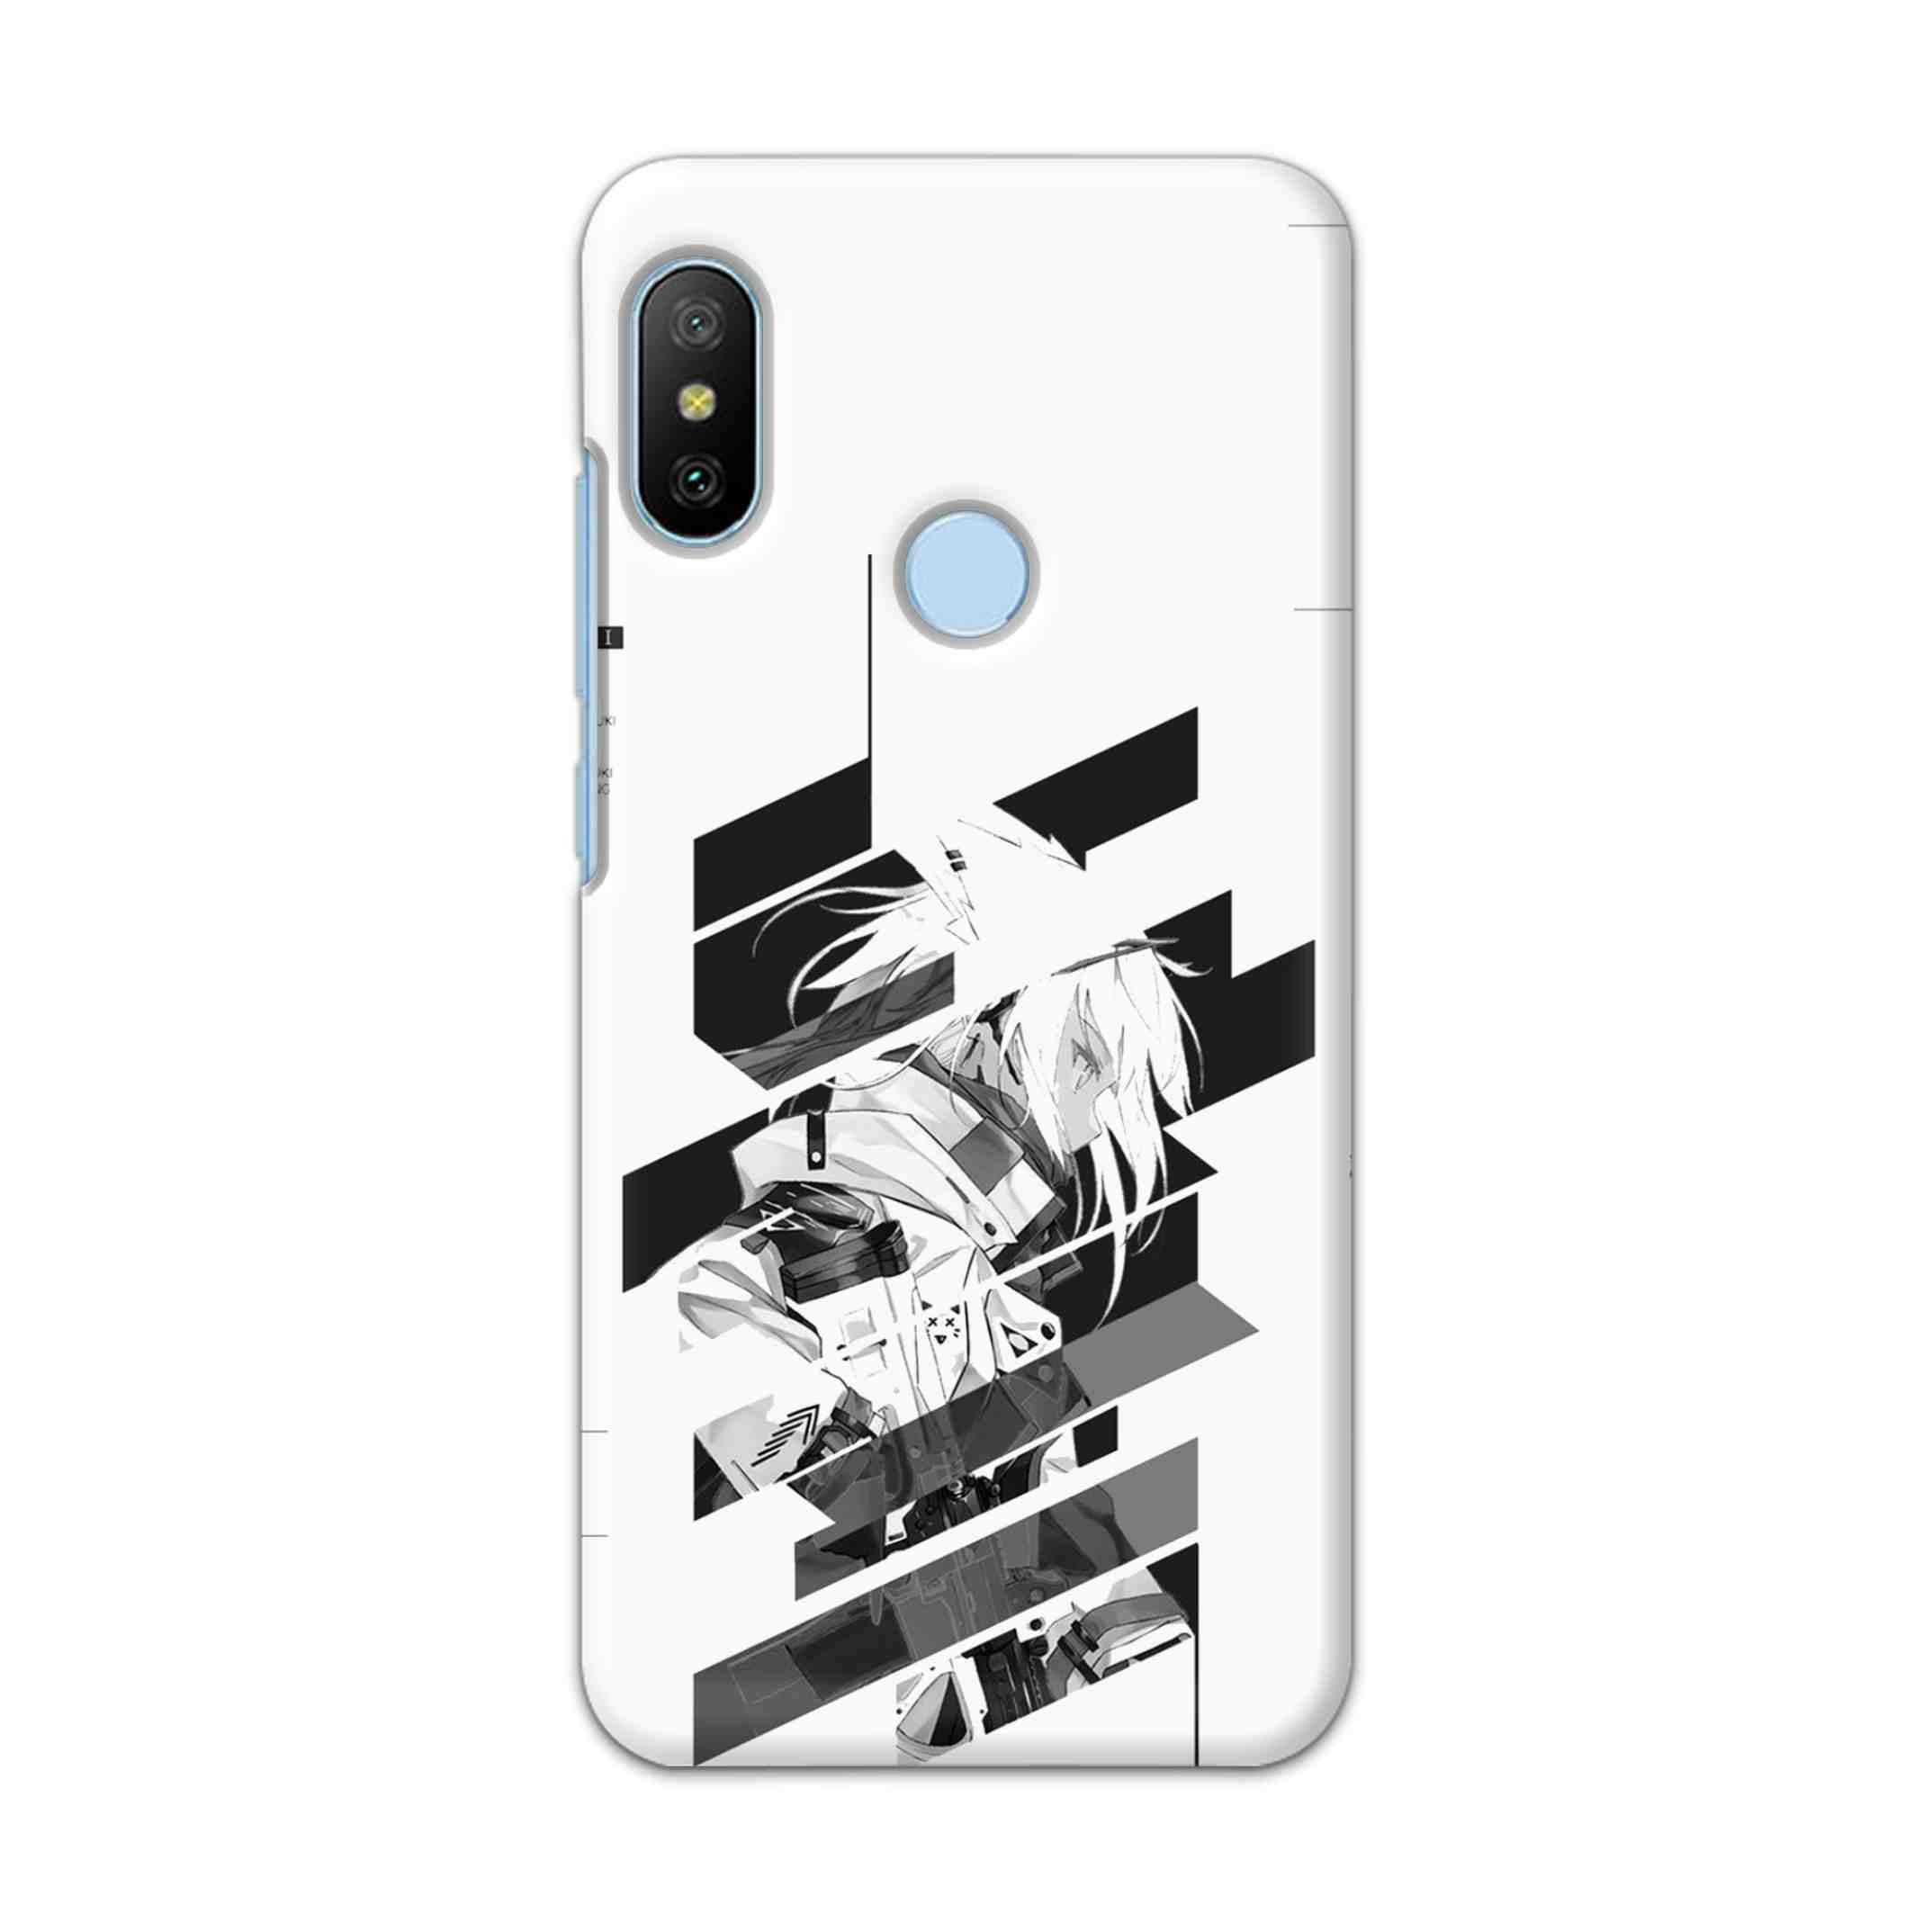 Buy Fubuki Hard Back Mobile Phone Case/Cover For Xiaomi Redmi 6 Pro Online